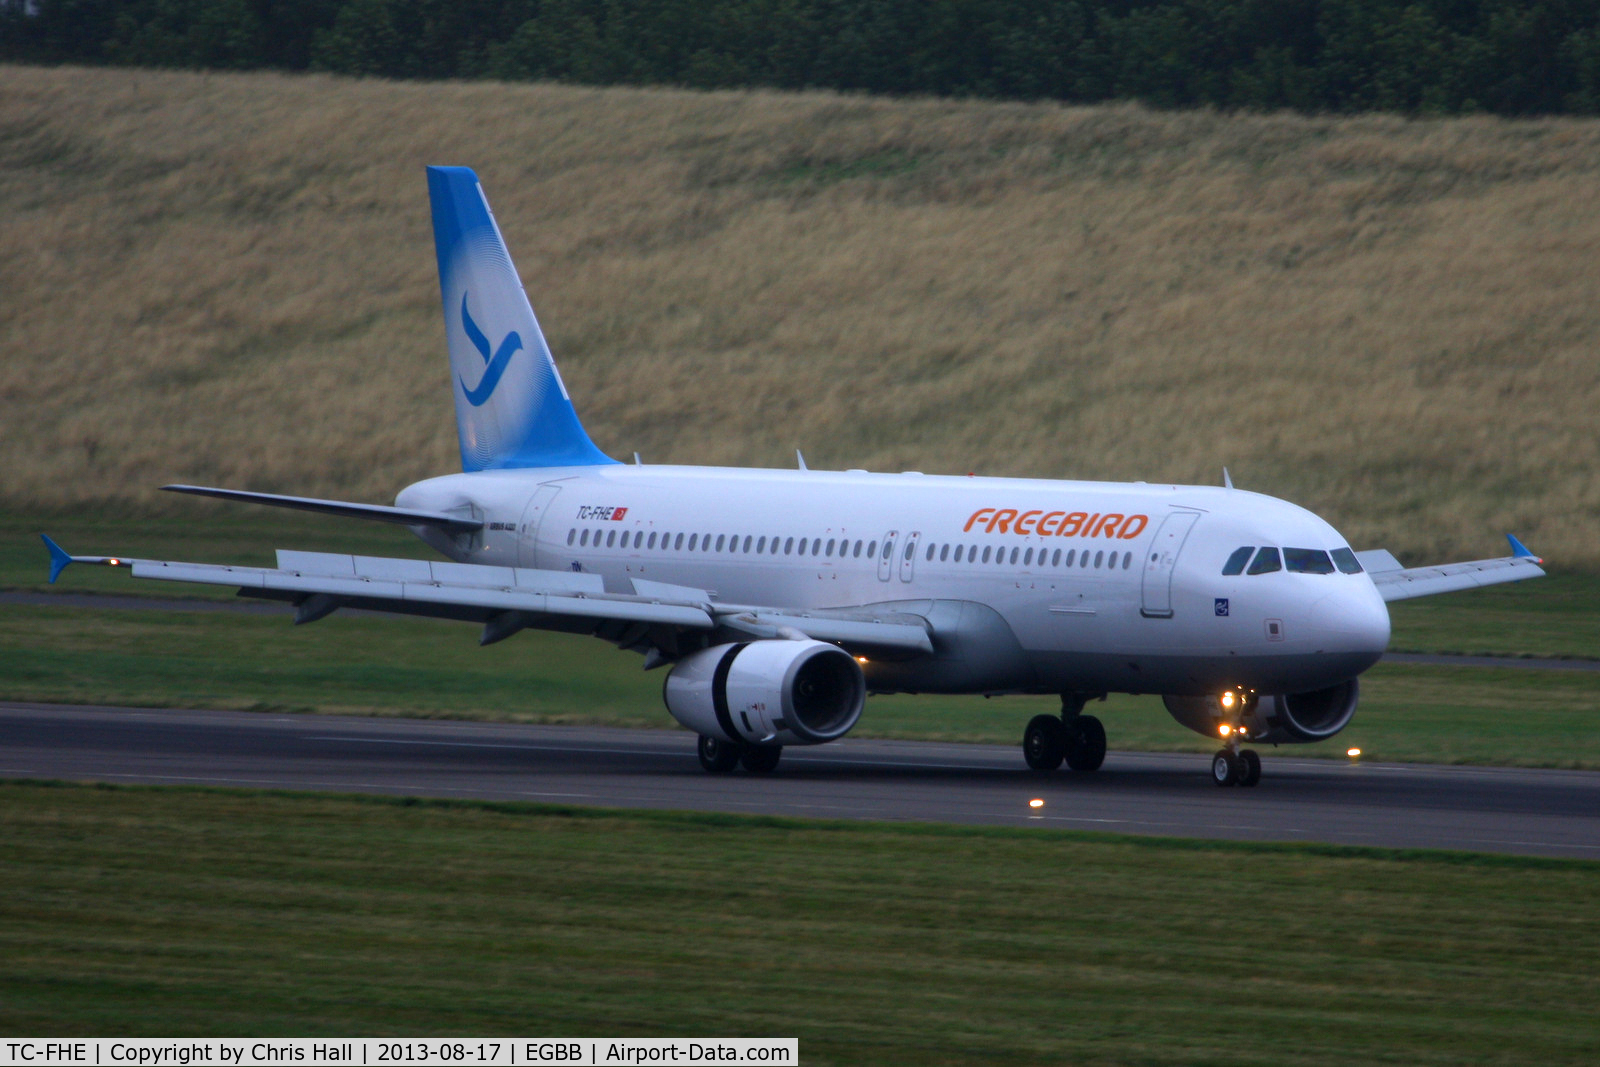 TC-FHE, 2006 Airbus A320-214 C/N 2804, Freebird Airlines